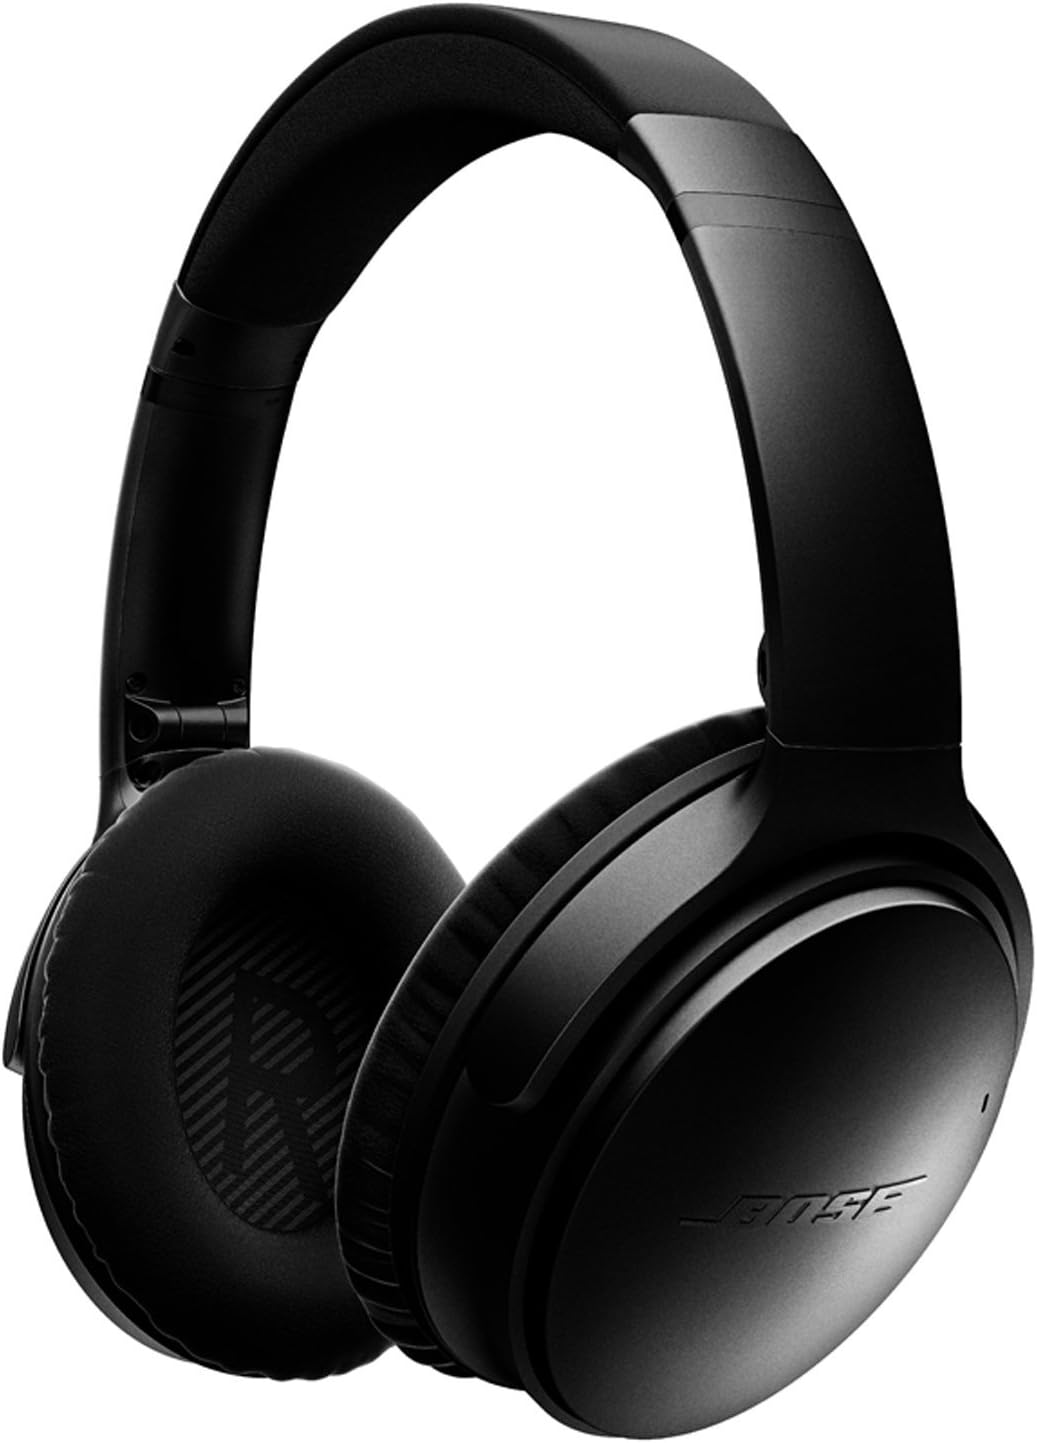 Bose QuietComfort 35 (Series I) Wireless Headphones, Noise Cancelling - Black (Refurbished)